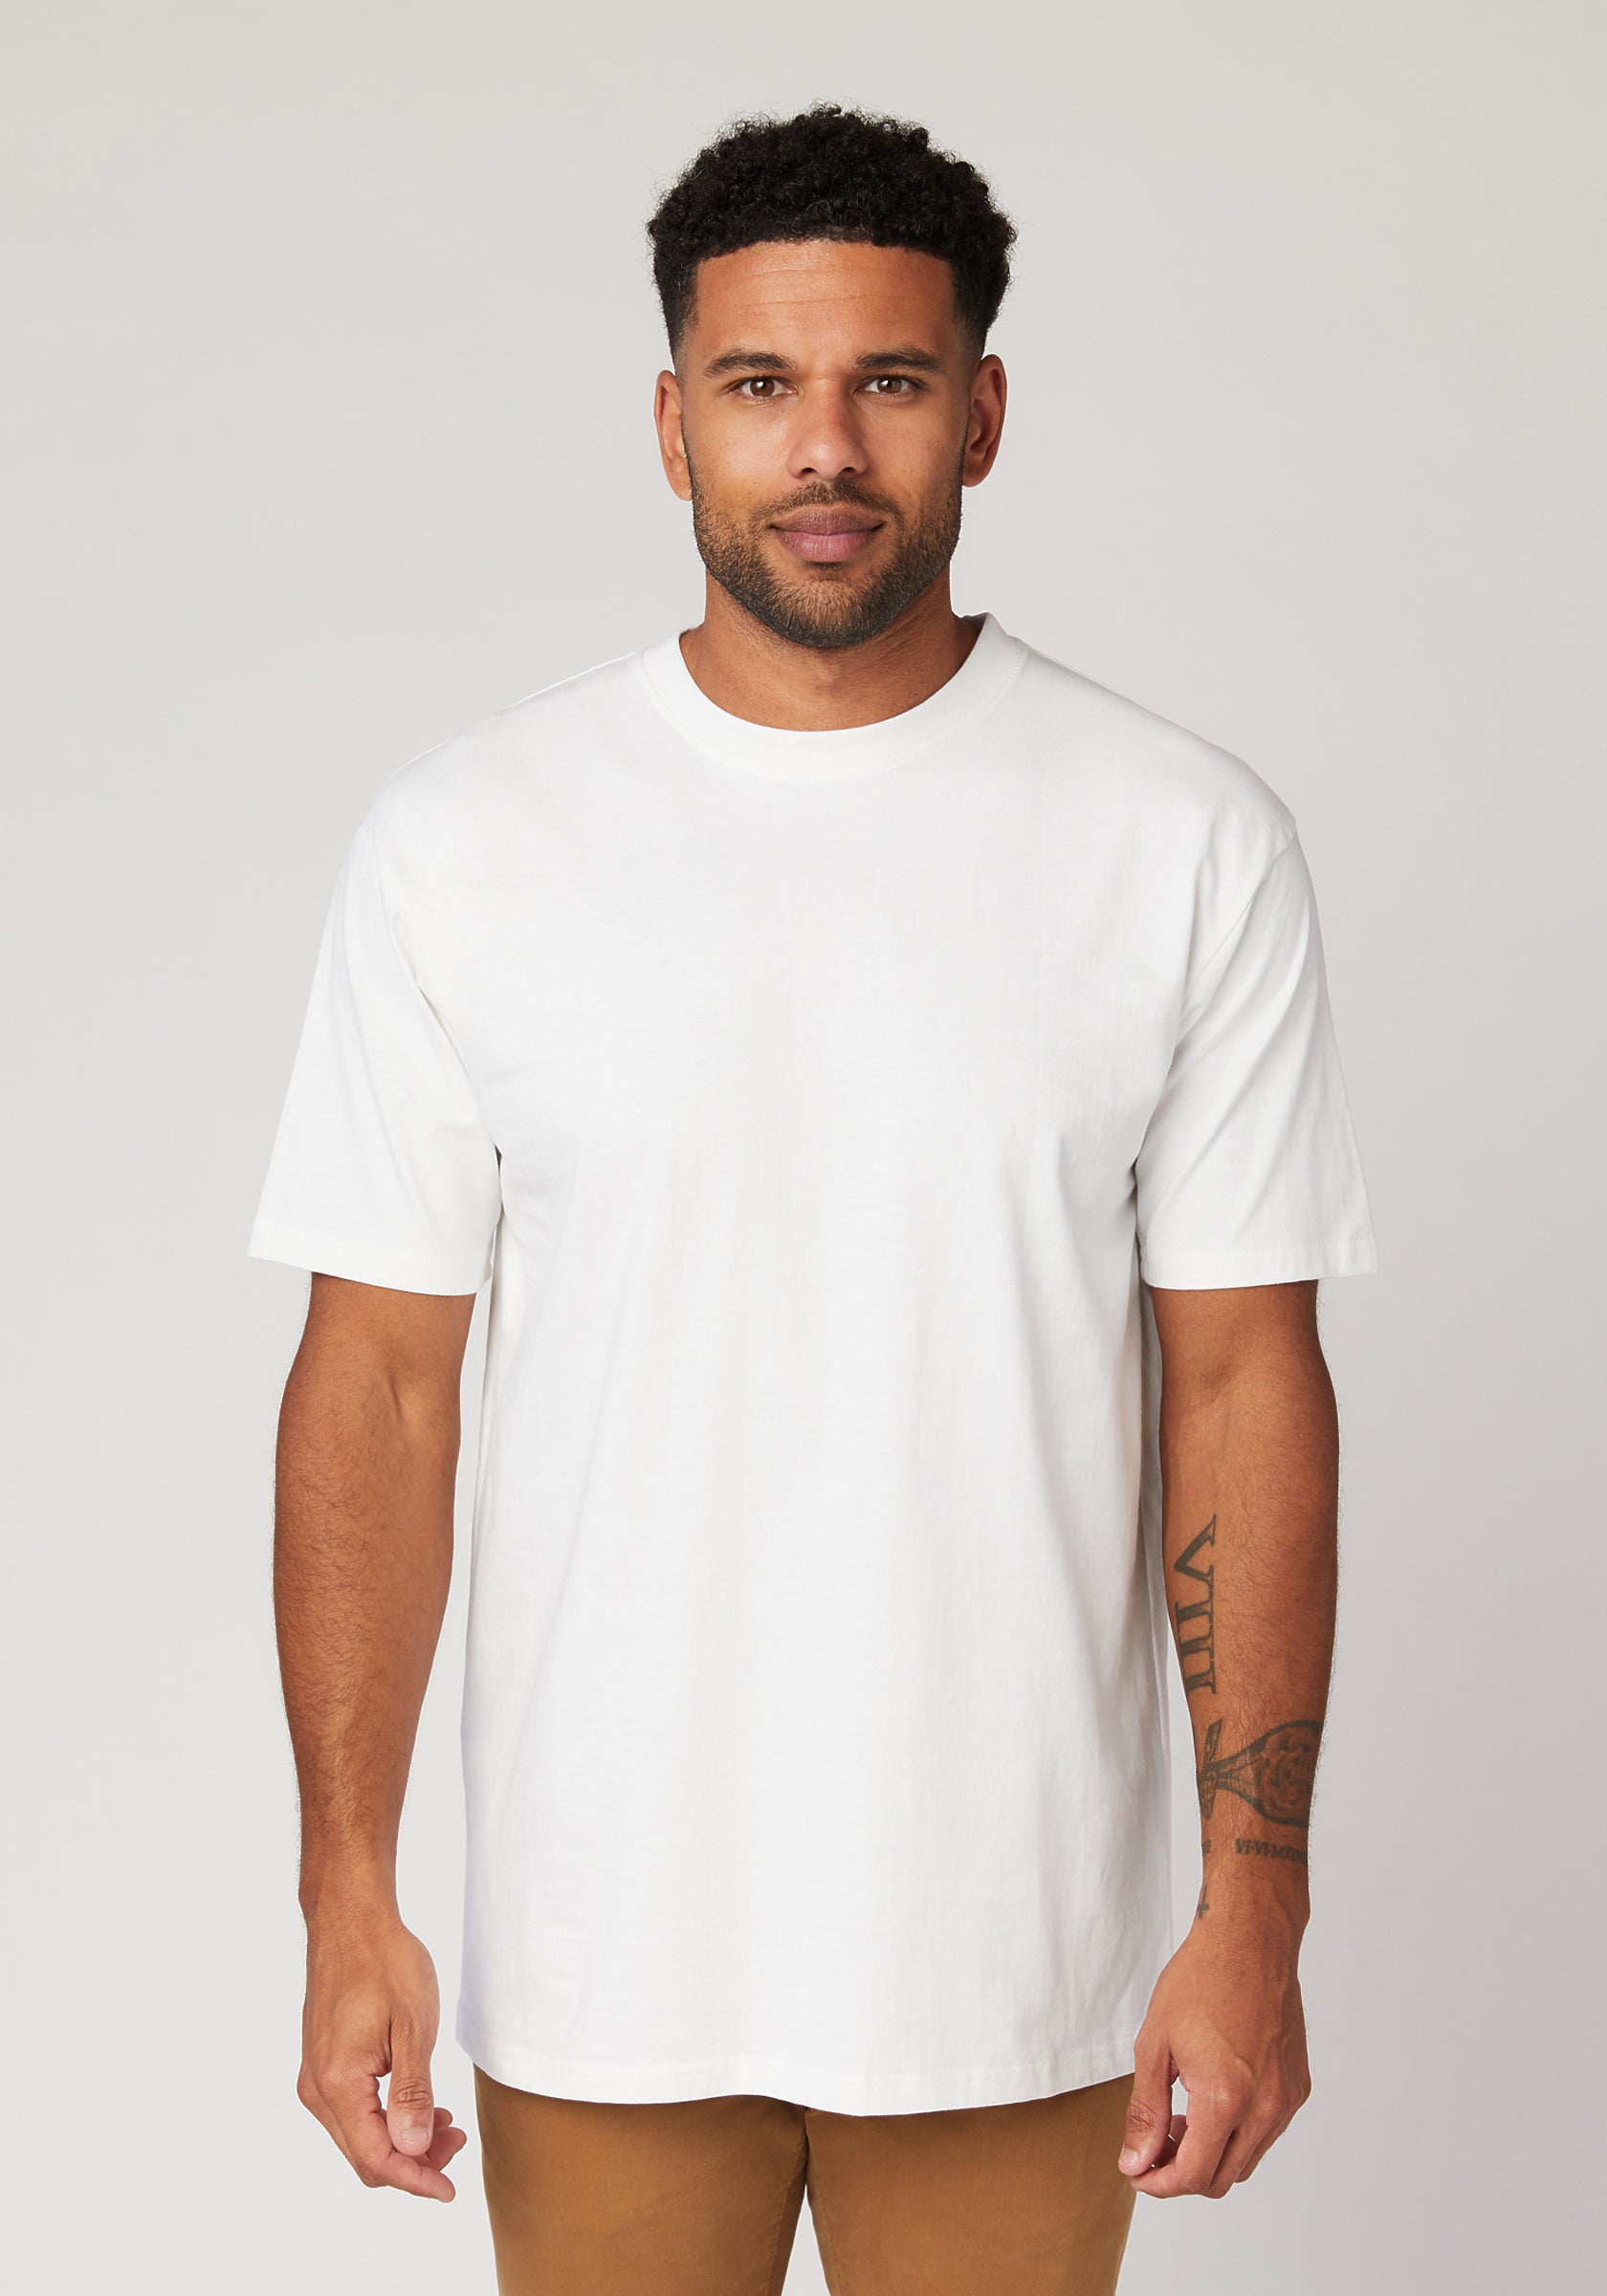 Heavy Weight & Urban Style T-Shirts (Screen printed) - BRNDURNAME